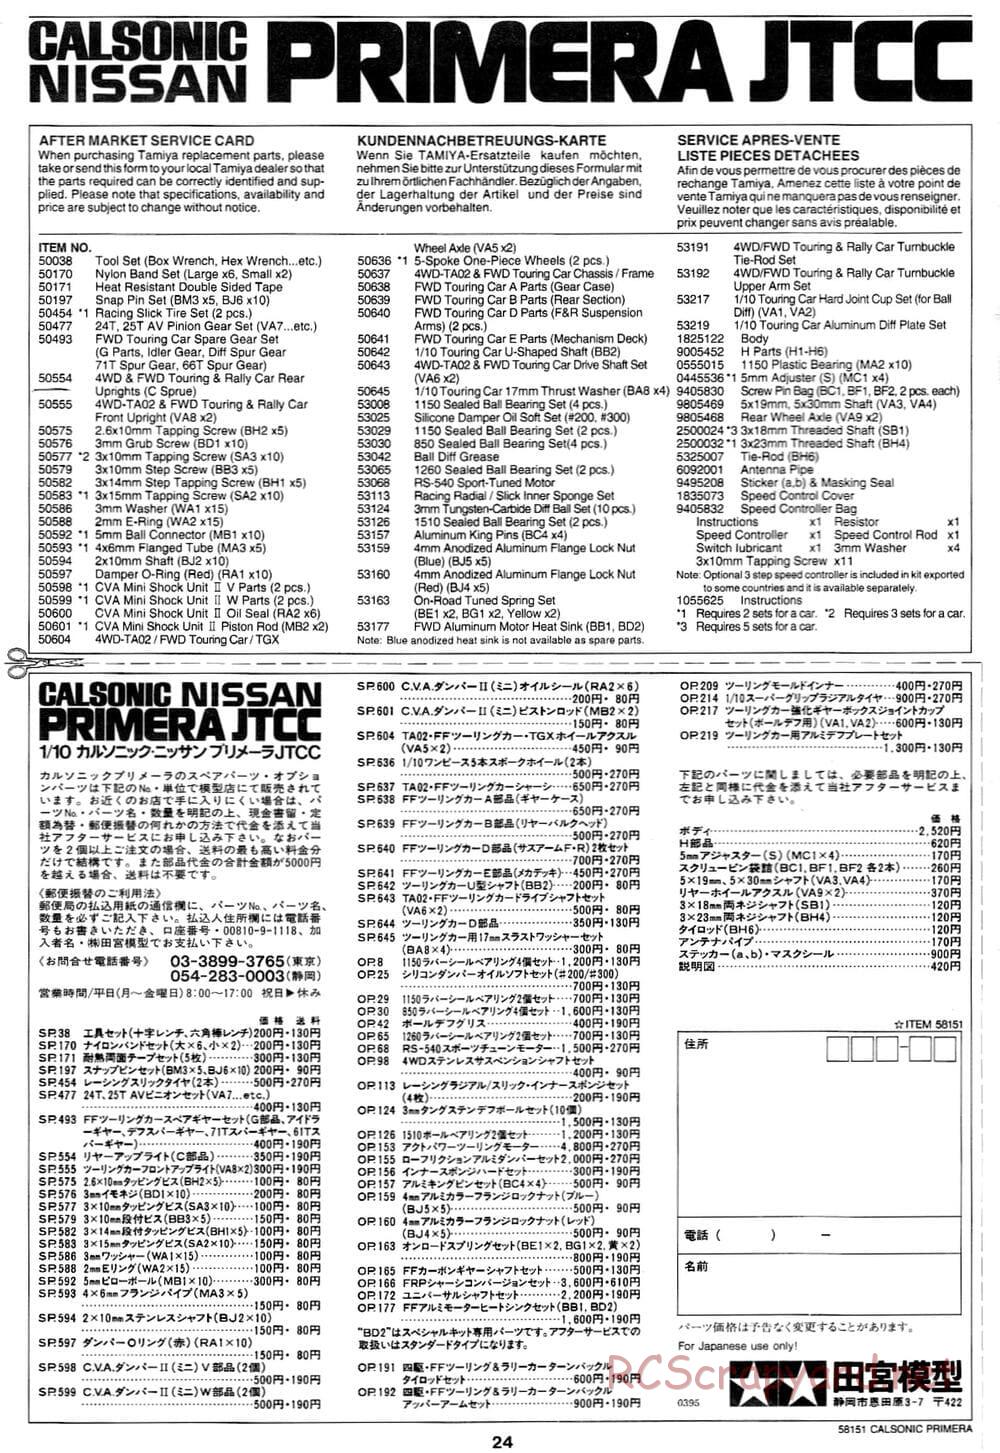 Tamiya - Calsonic Nissan Primera JTCC - FF-01 Chassis - Manual - Page 24